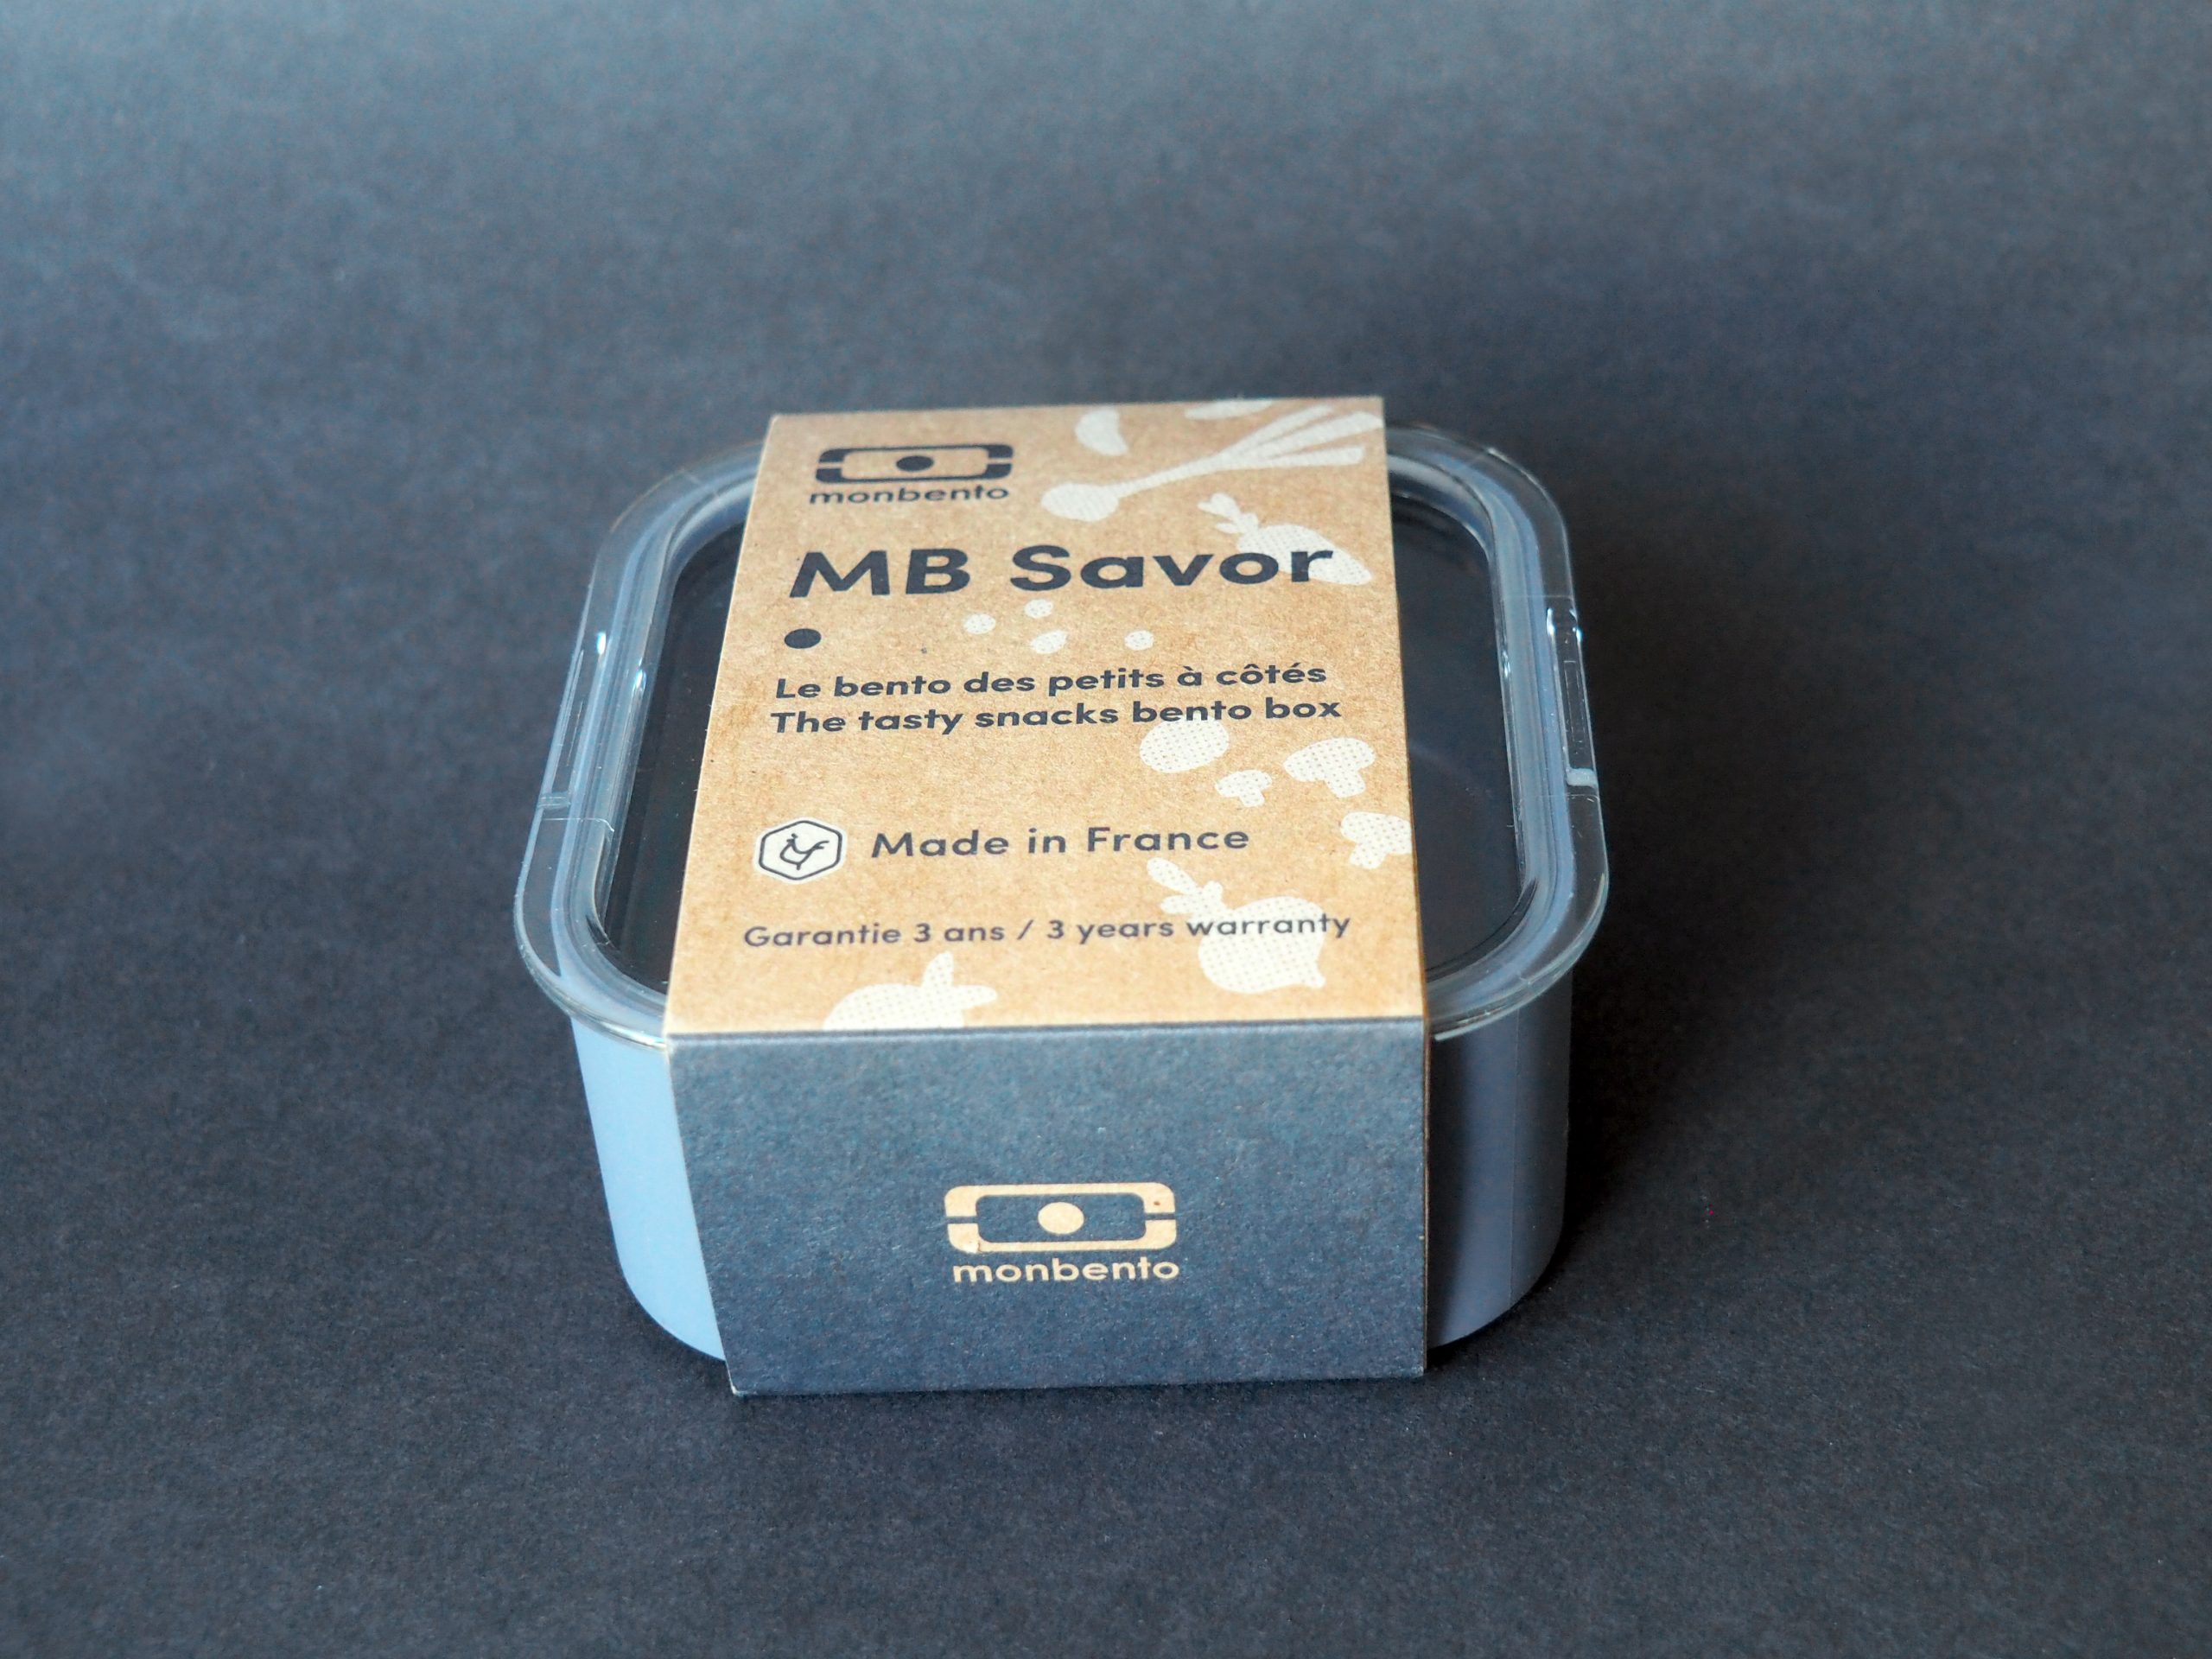 MB Savor - Container - monbento